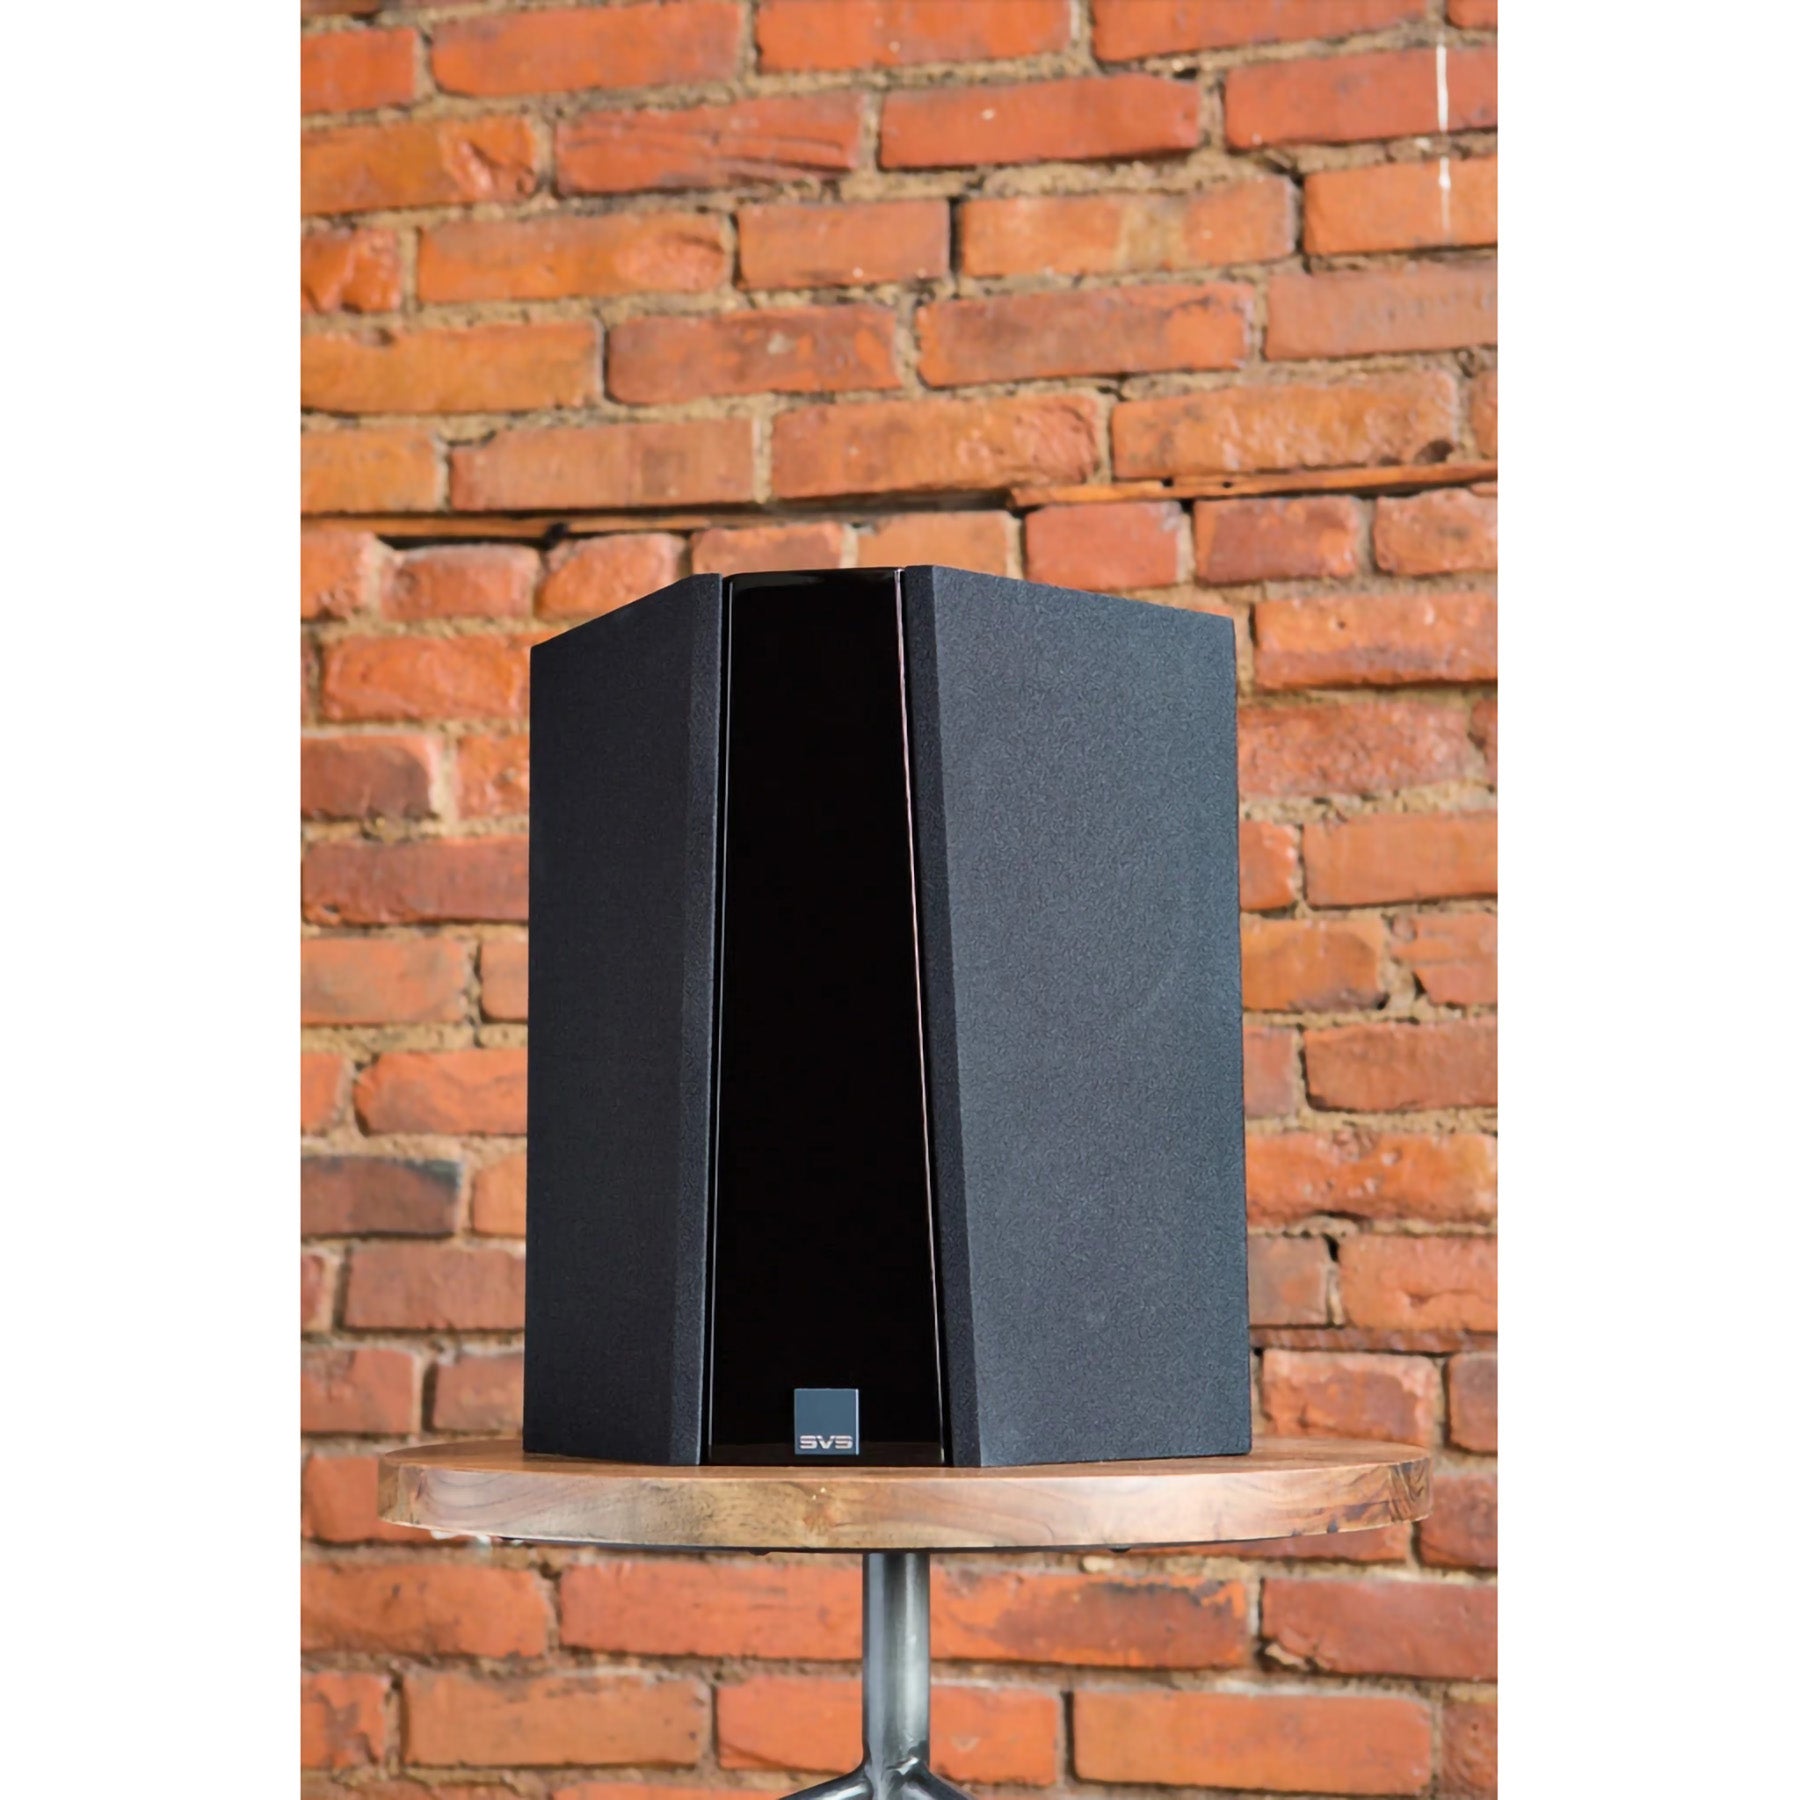 SVS Ultra Surround Speakers (pair)